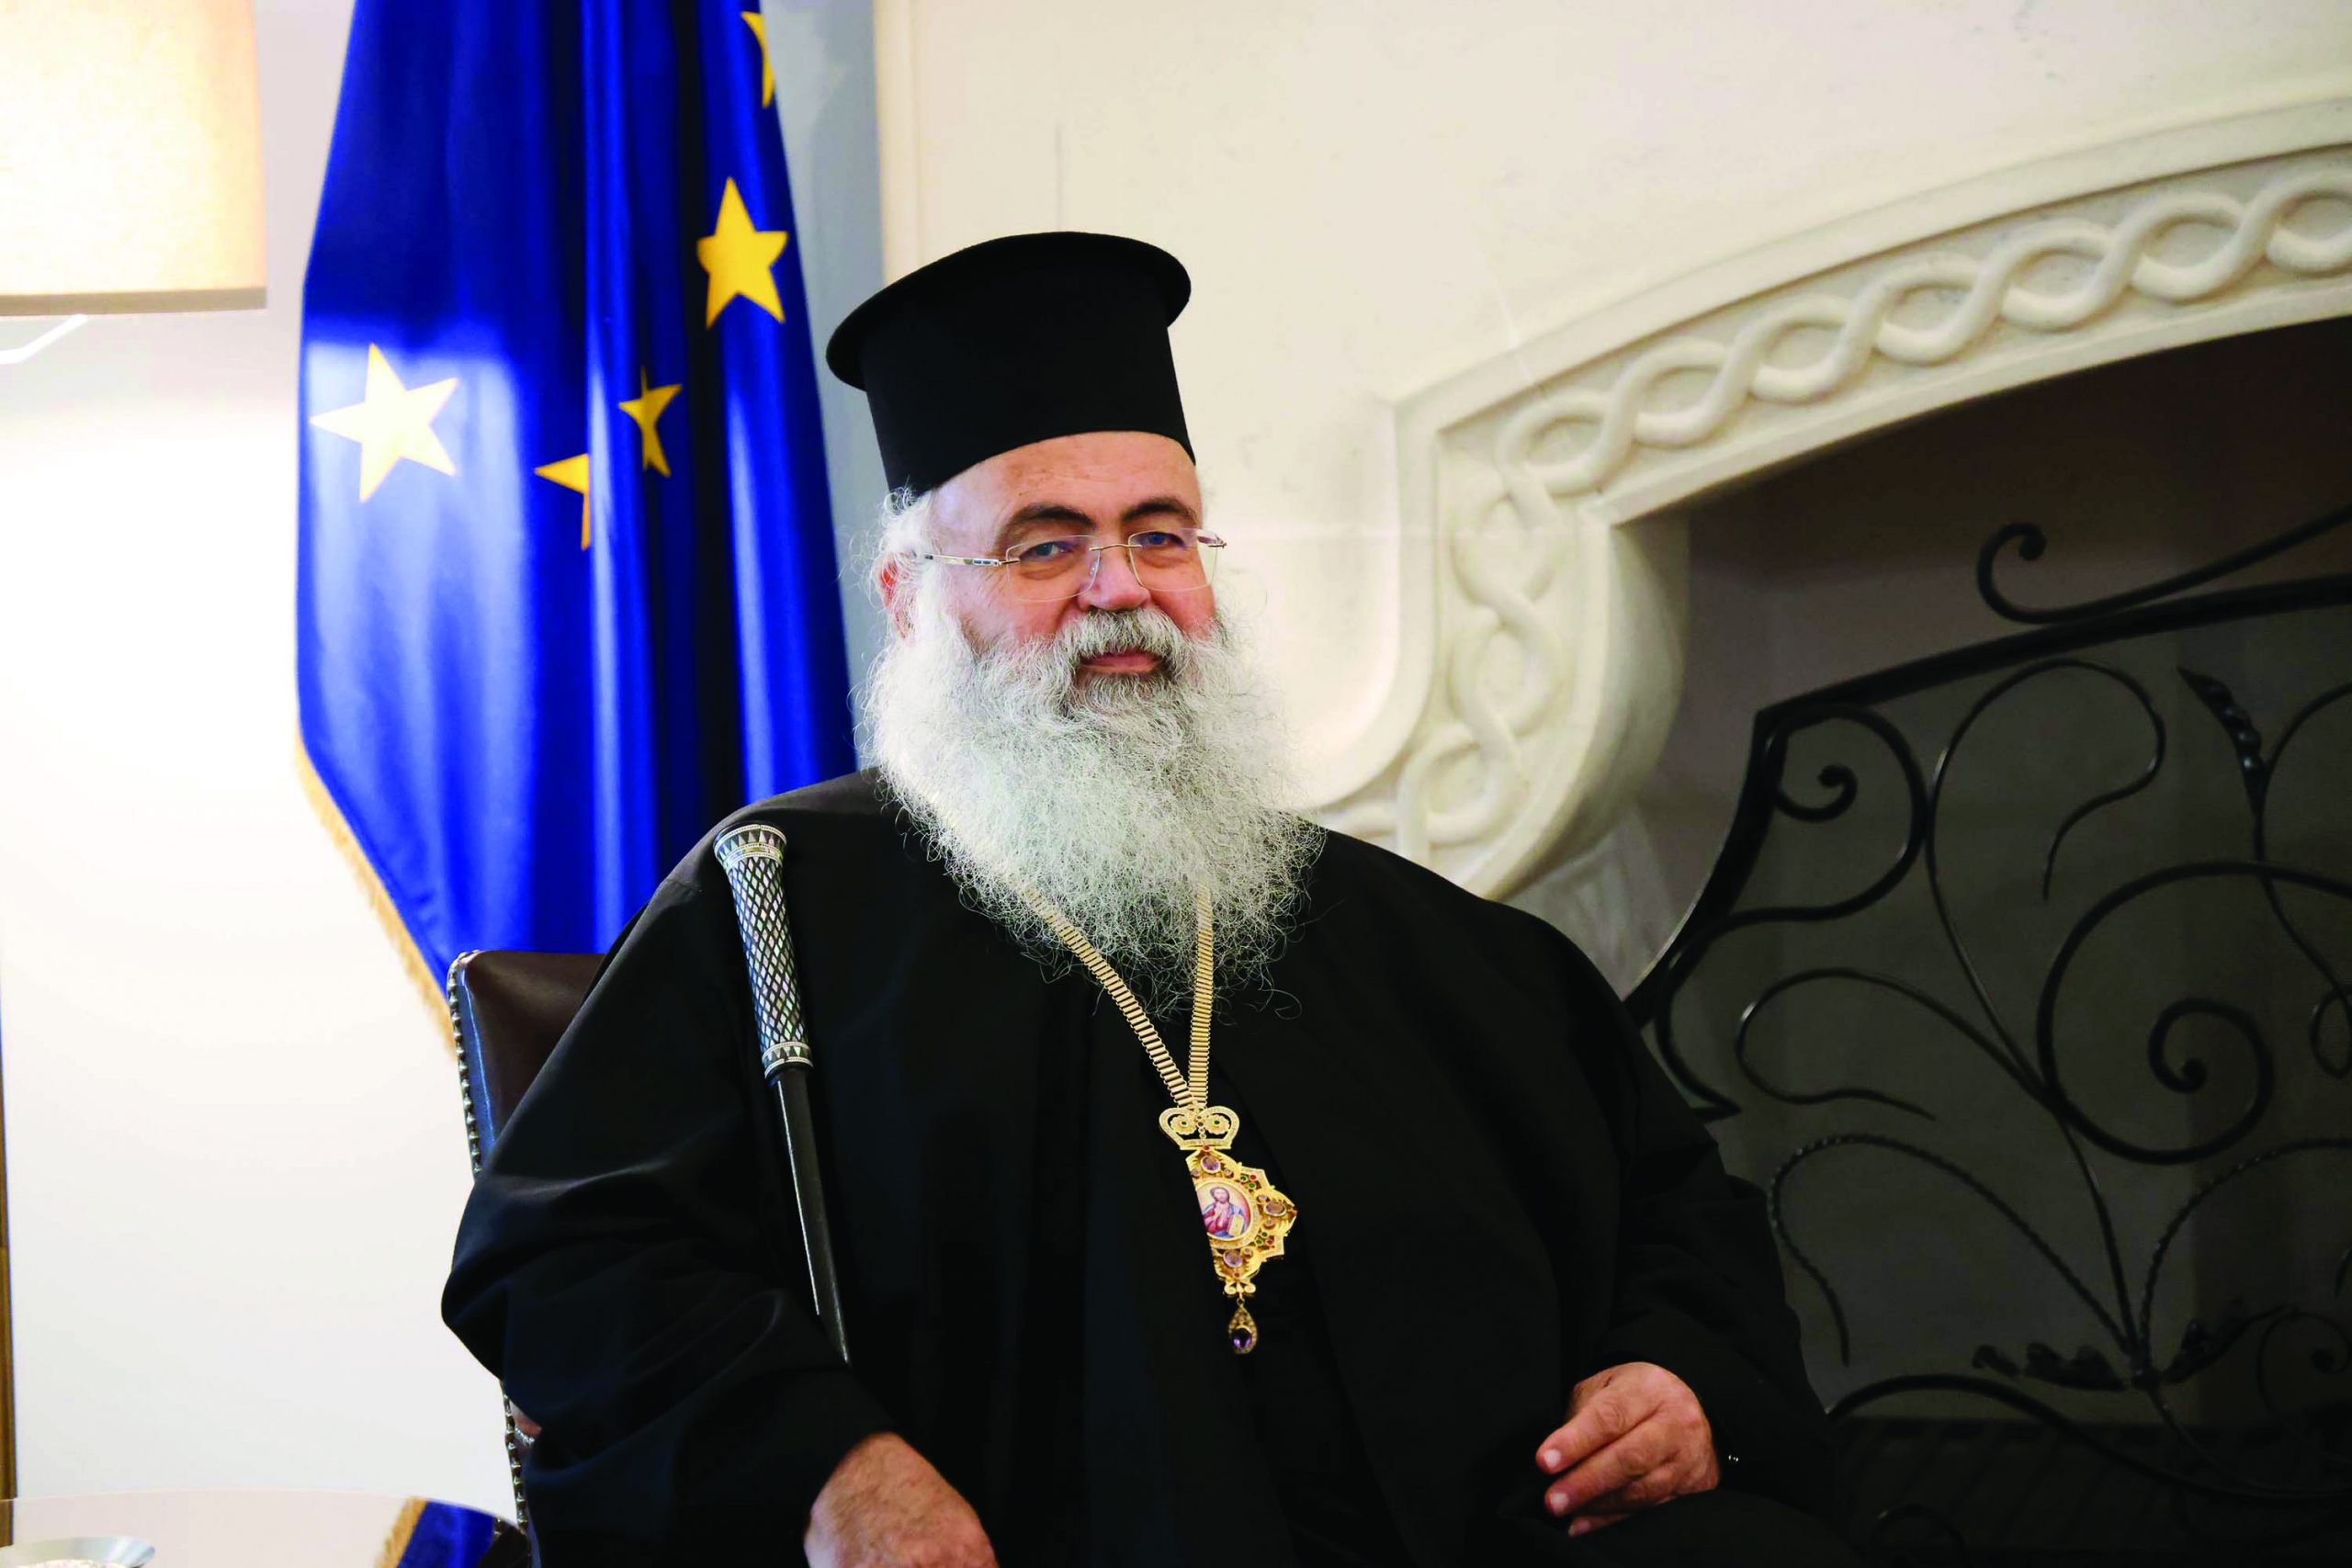 O Αρχιεπίσκοπος Κύπρου, Γεώργιος στη «Σημερινή»: «Αν πέσει η Κύπρος, πέφτει και η Ελλάδα»